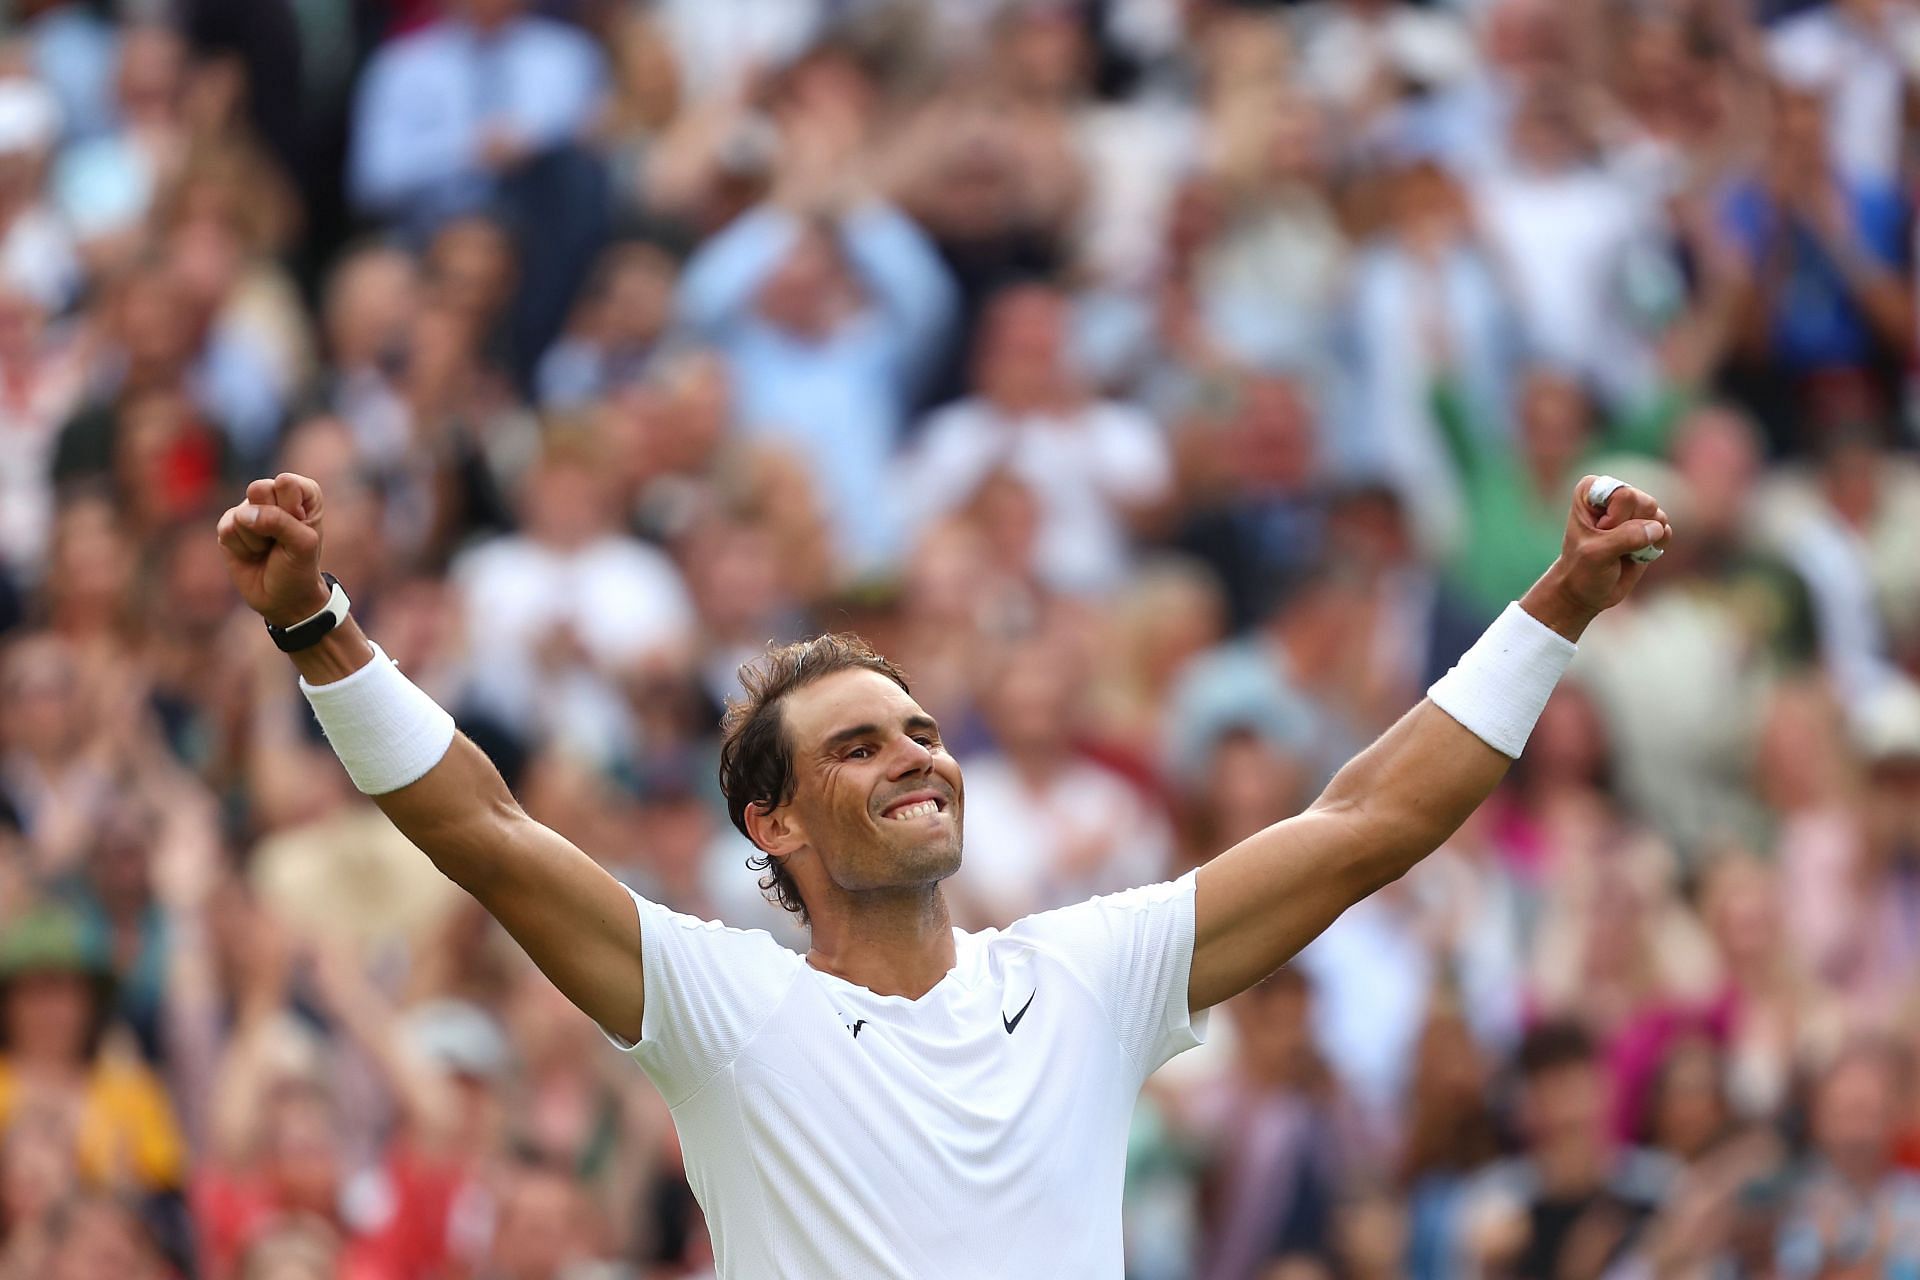 Rafael Nadal will face Nick Kyrgios in the Wimbledon semifinals